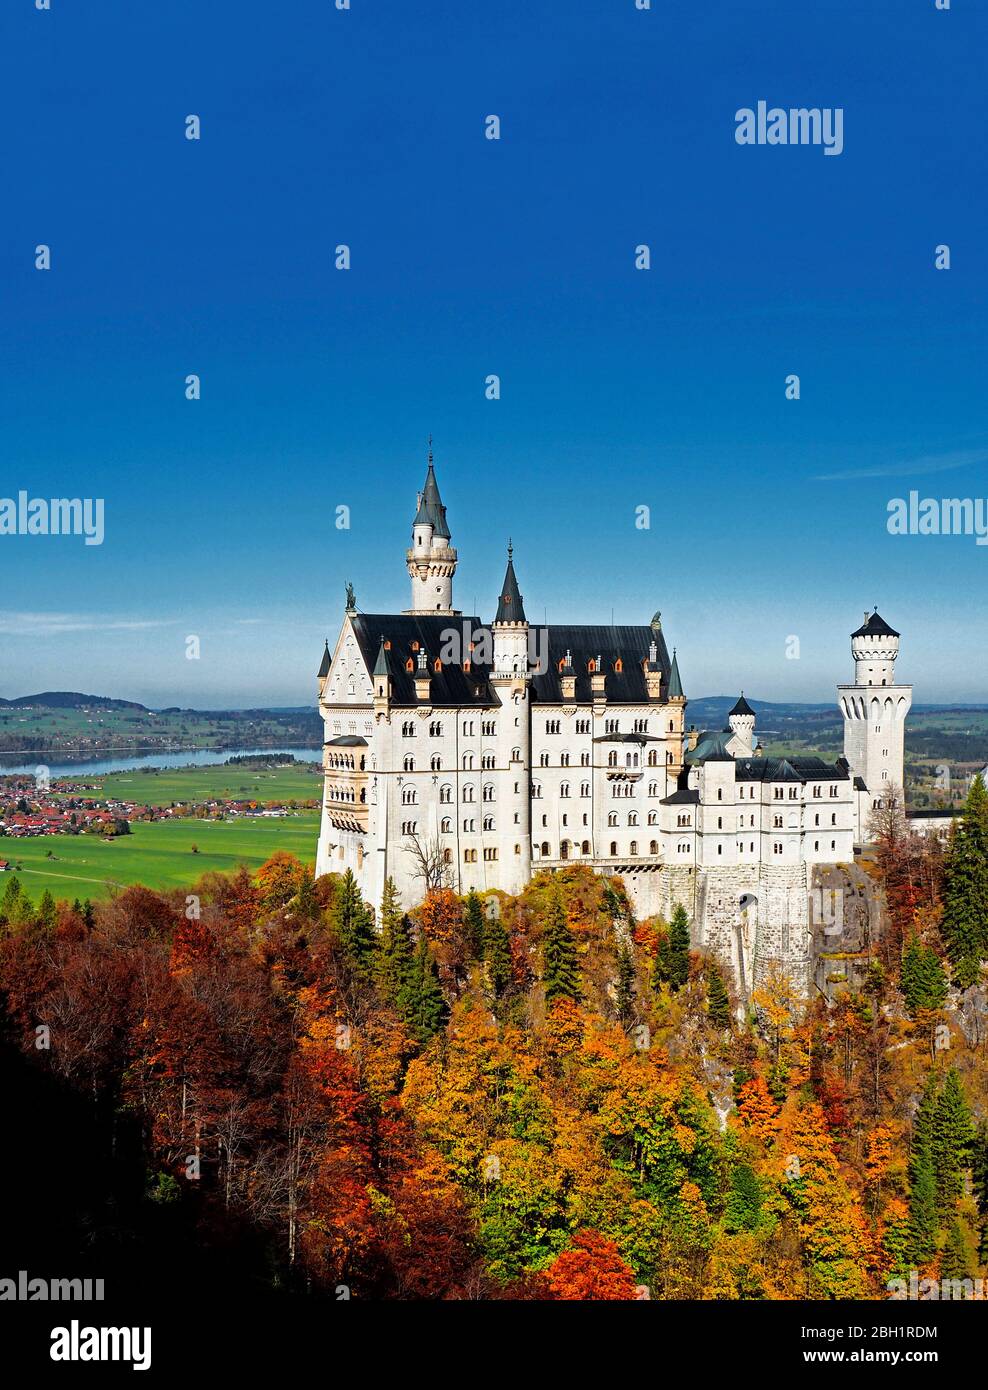 Castello Neuschwanstein di Re Luigi in Baviera, Germania. Foto Stock